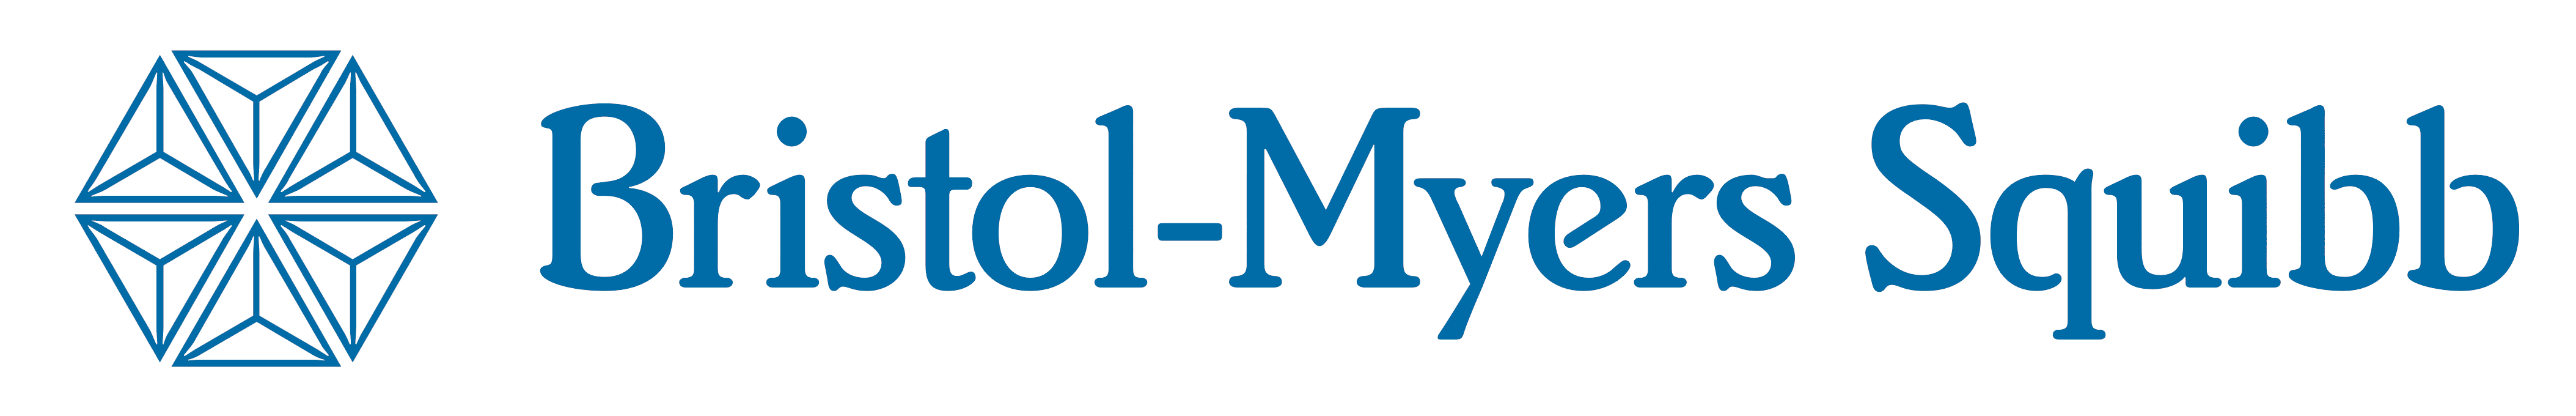 Bristol-Myers_Squibb_logo_logotype